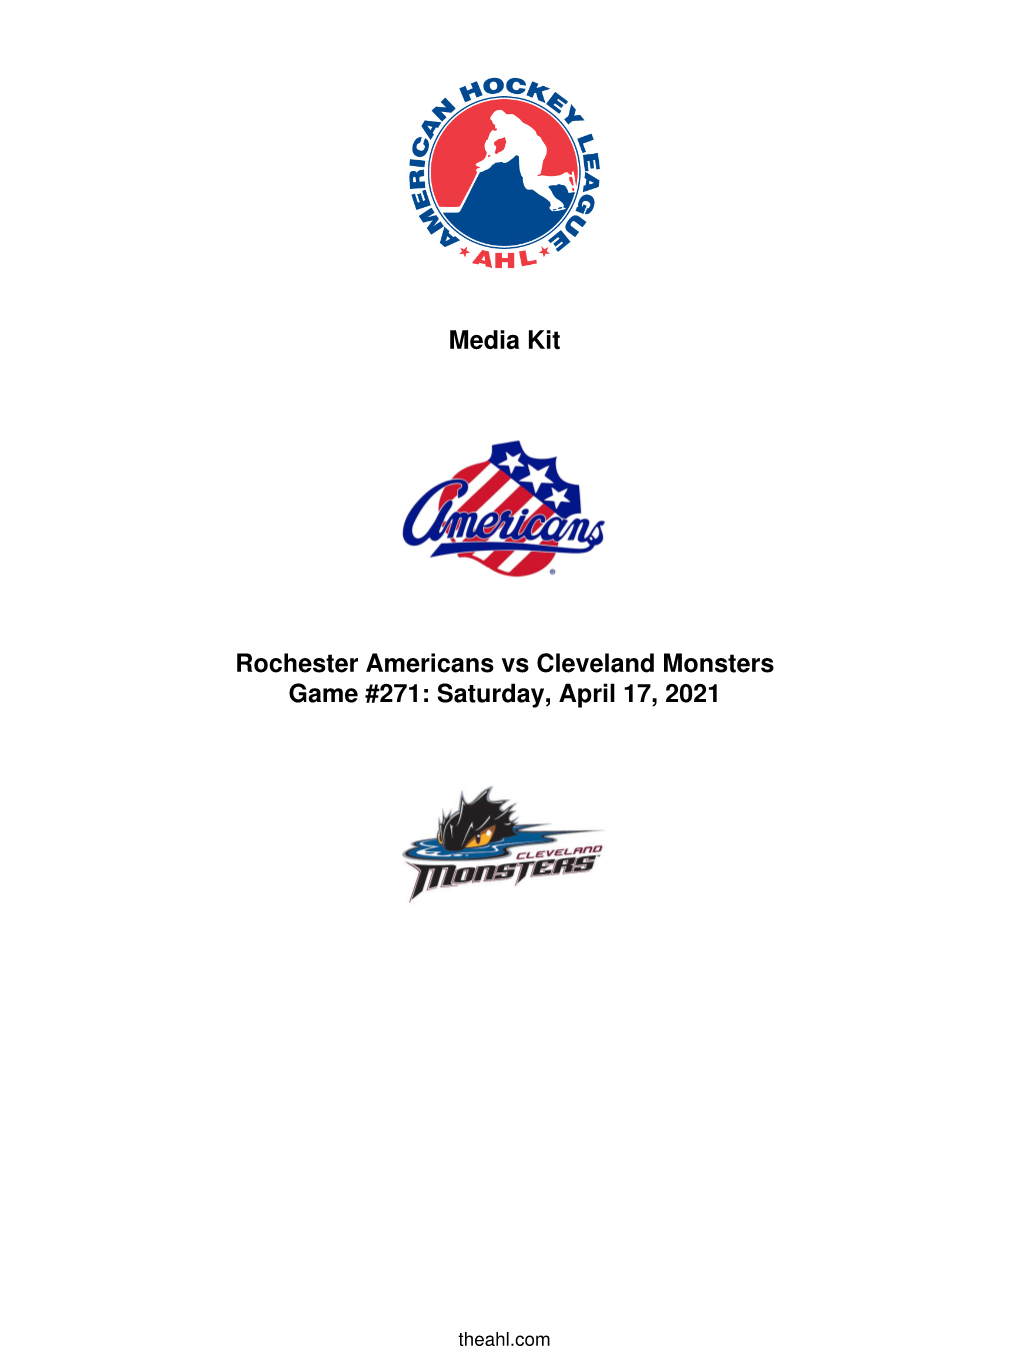 Media Kit Rochester Americans Vs Cleveland Monsters Game #271